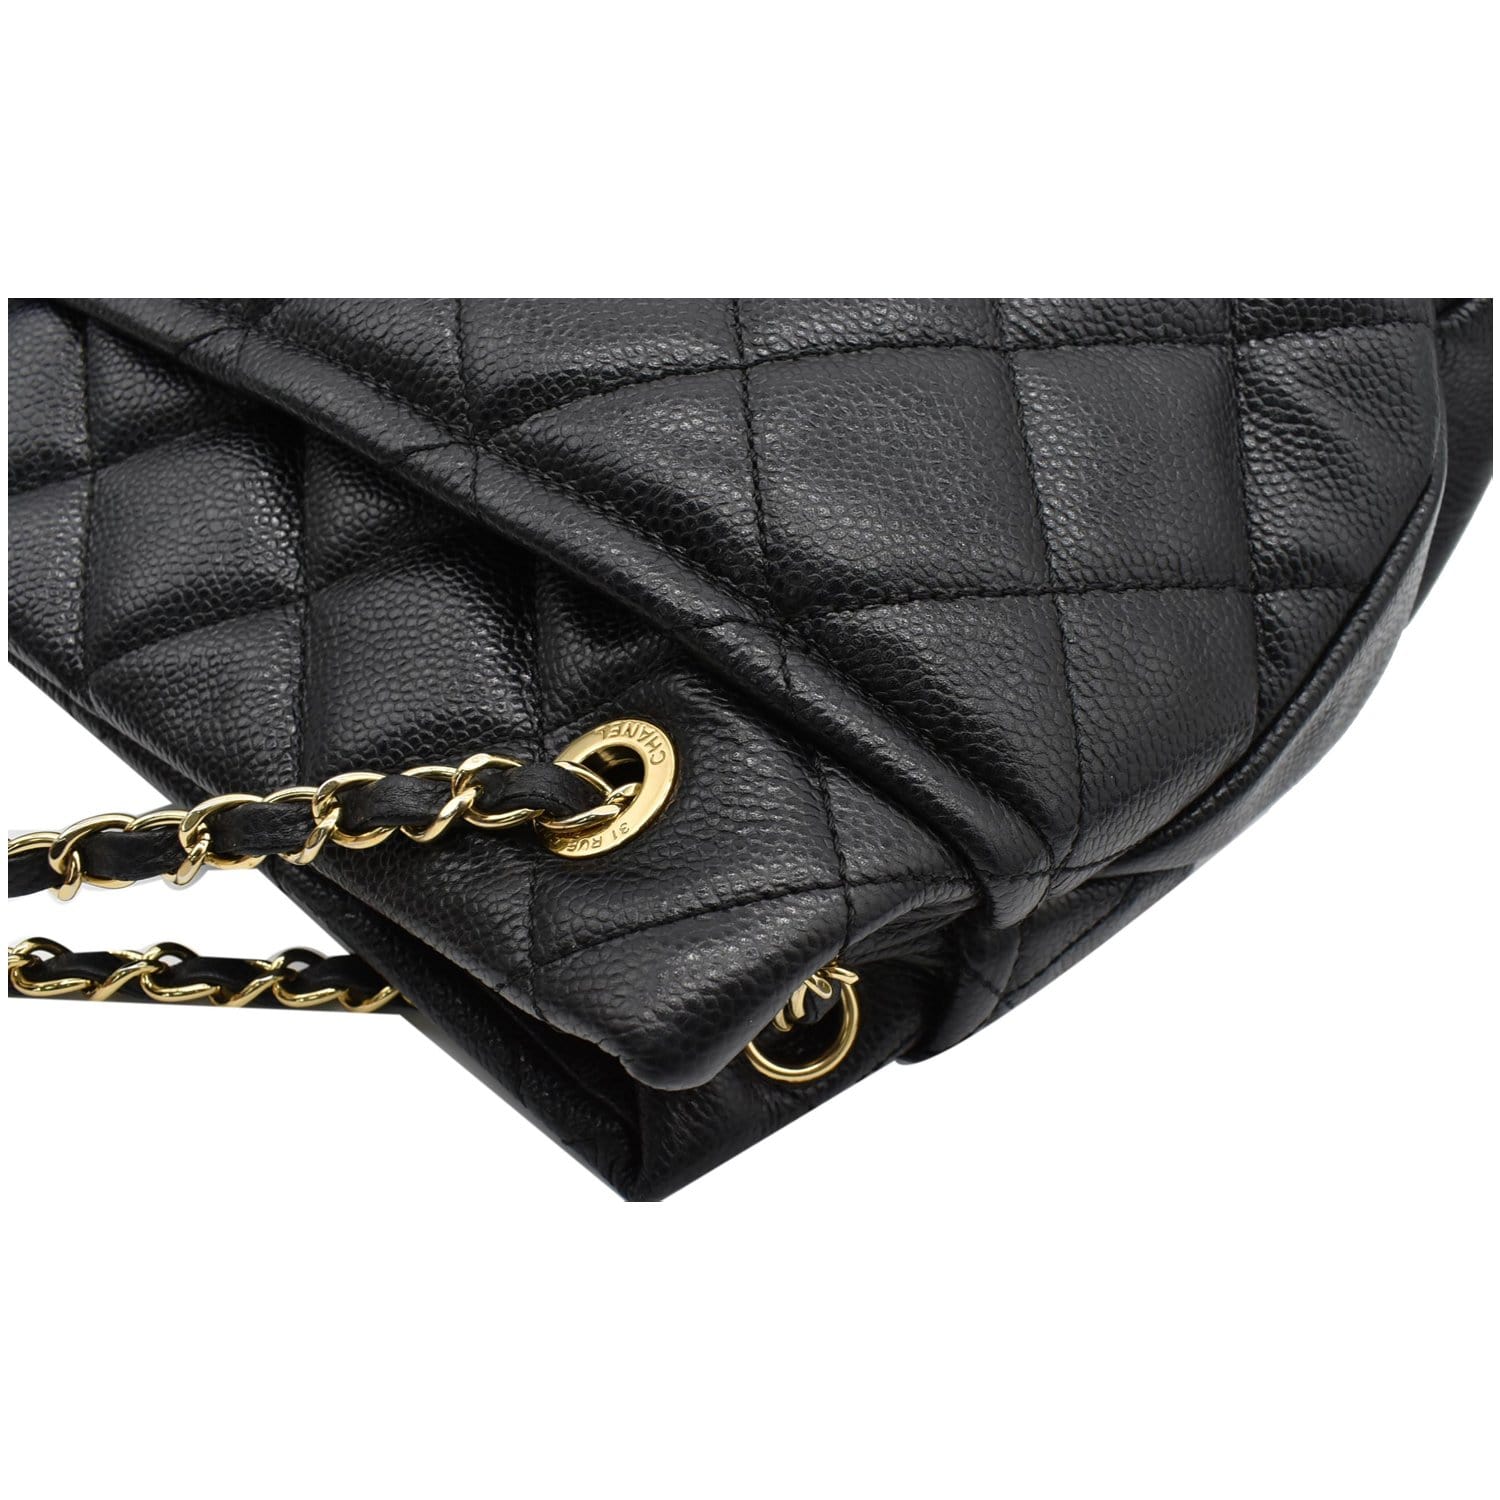 Chanel Black Caviar Leather Triple CC Chain Tote Bag 220858